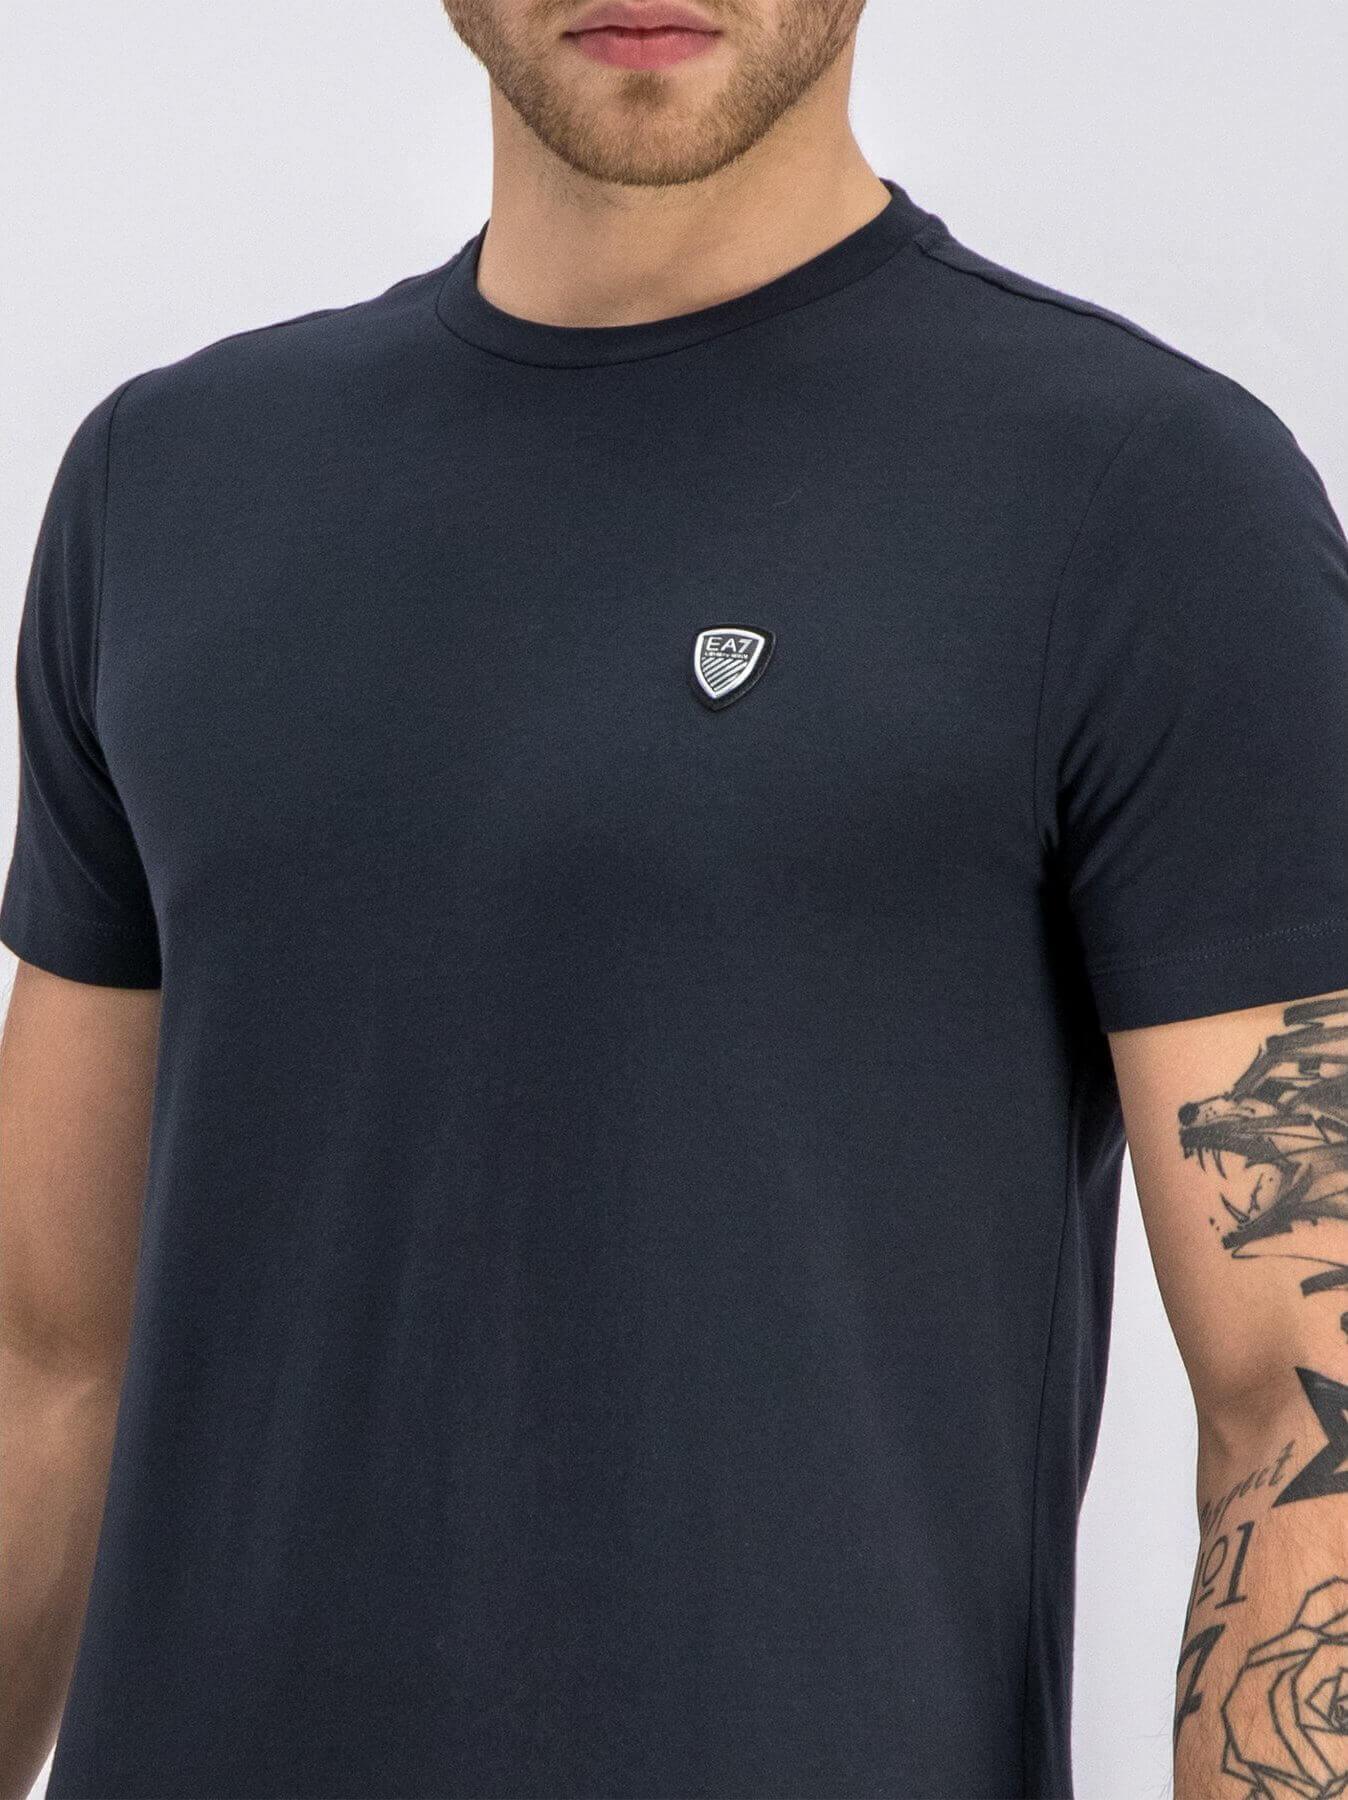 Emporio Armani EA7 Men's Core Shield Tee T-Shirt-TruClothing